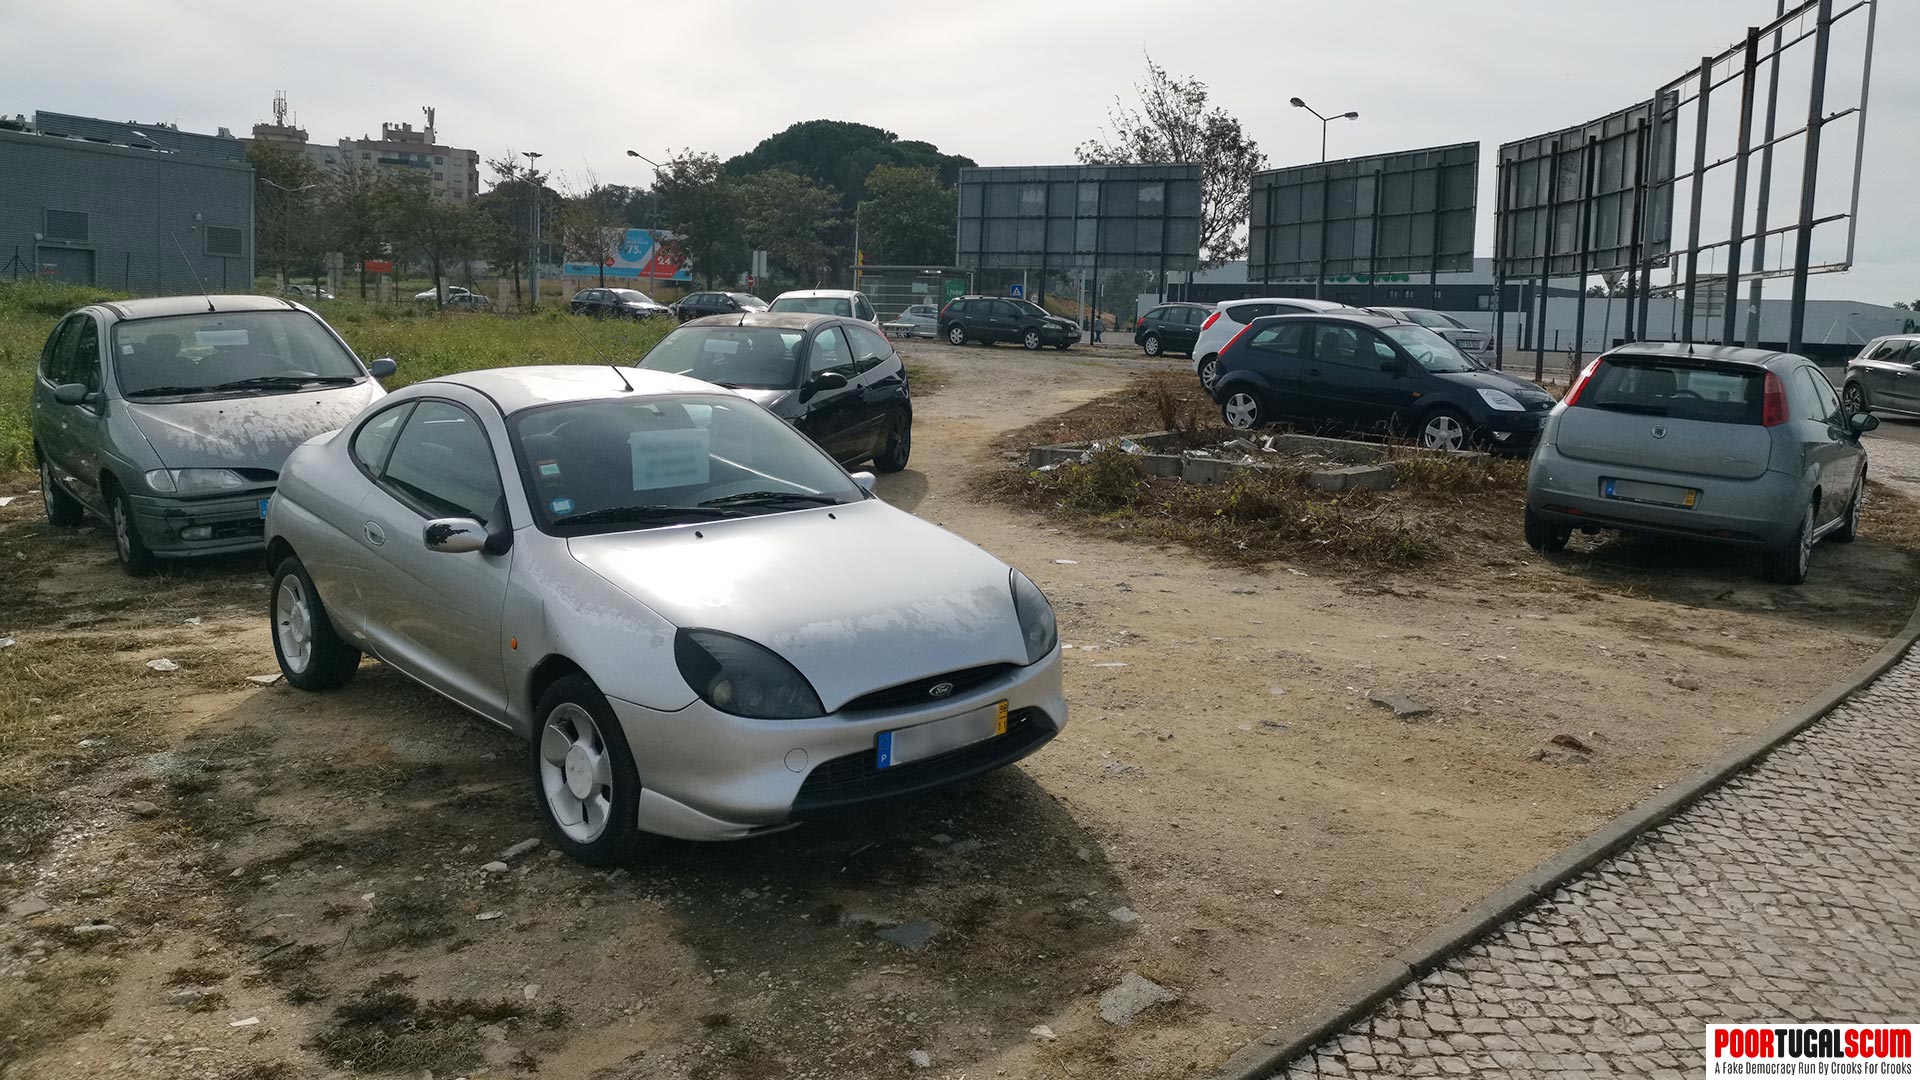 Private car sales park in Portugal